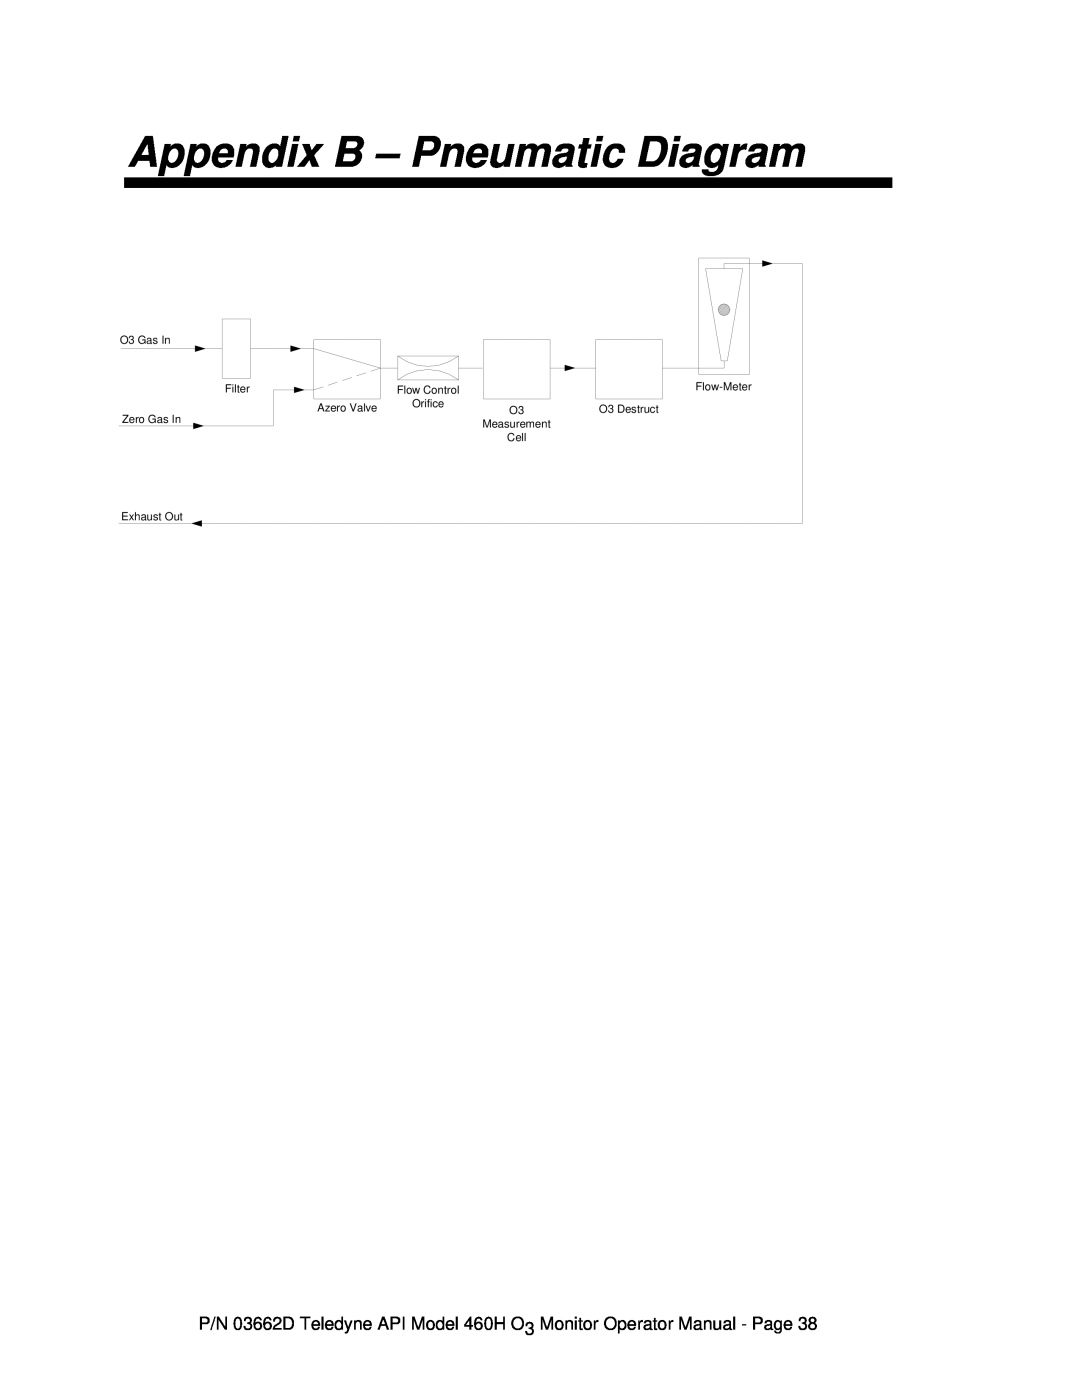 Teledyne Appendix B - Pneumatic Diagram, P/N 03662D Teledyne API Model 460H O3 Monitor Operator Manual - Page 